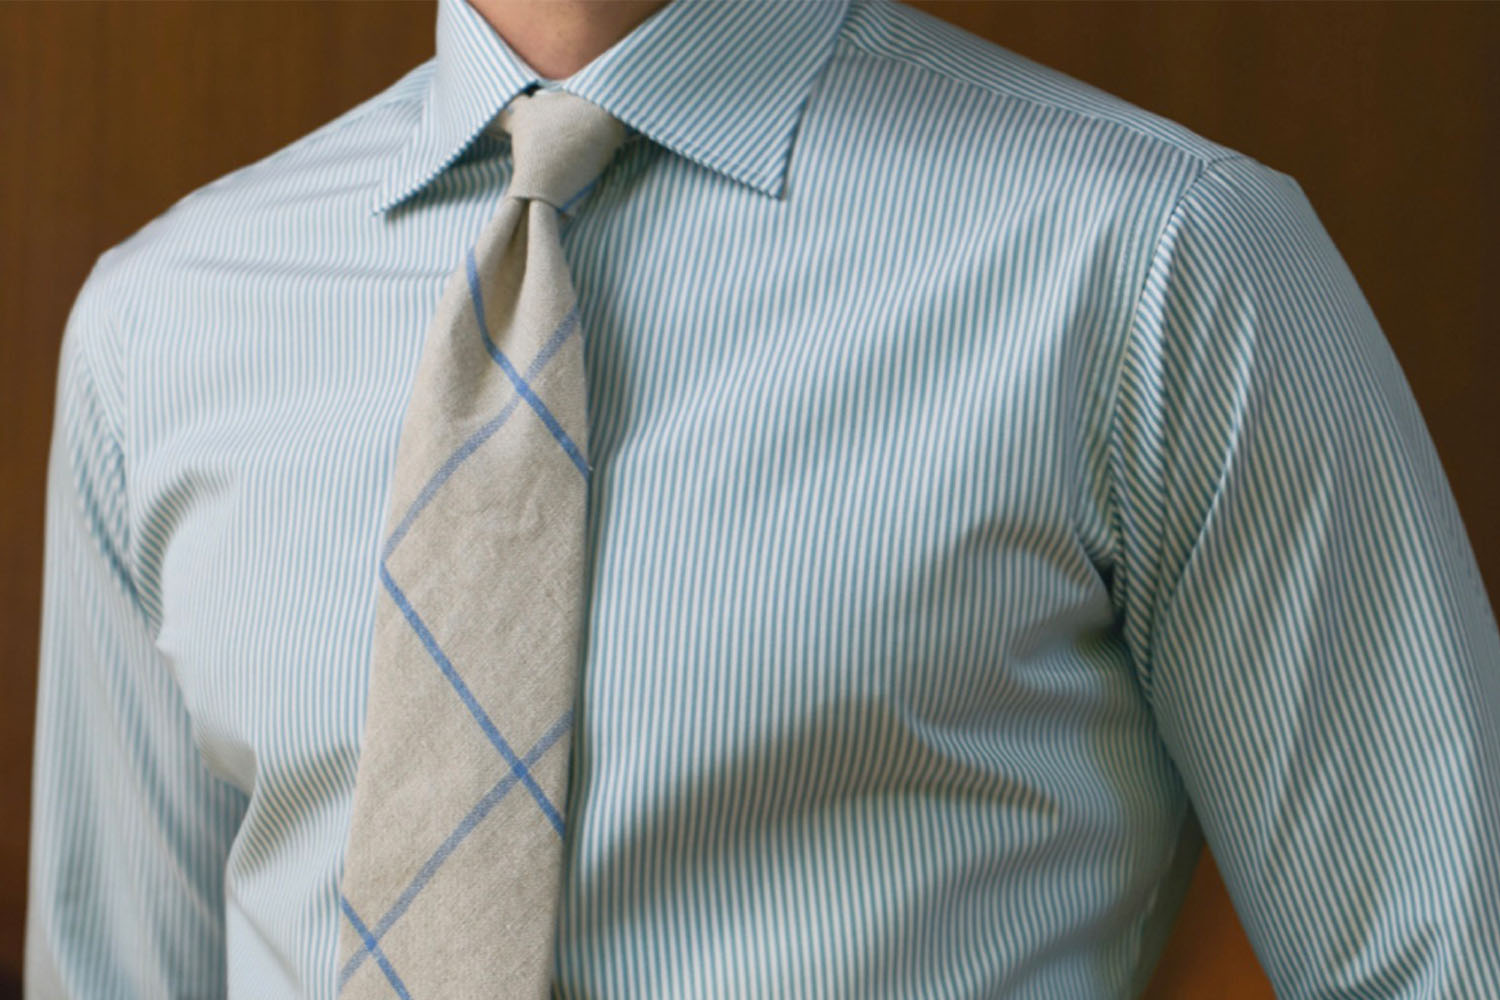 A close up shot of a model in a light blue Hamilton dress shirt